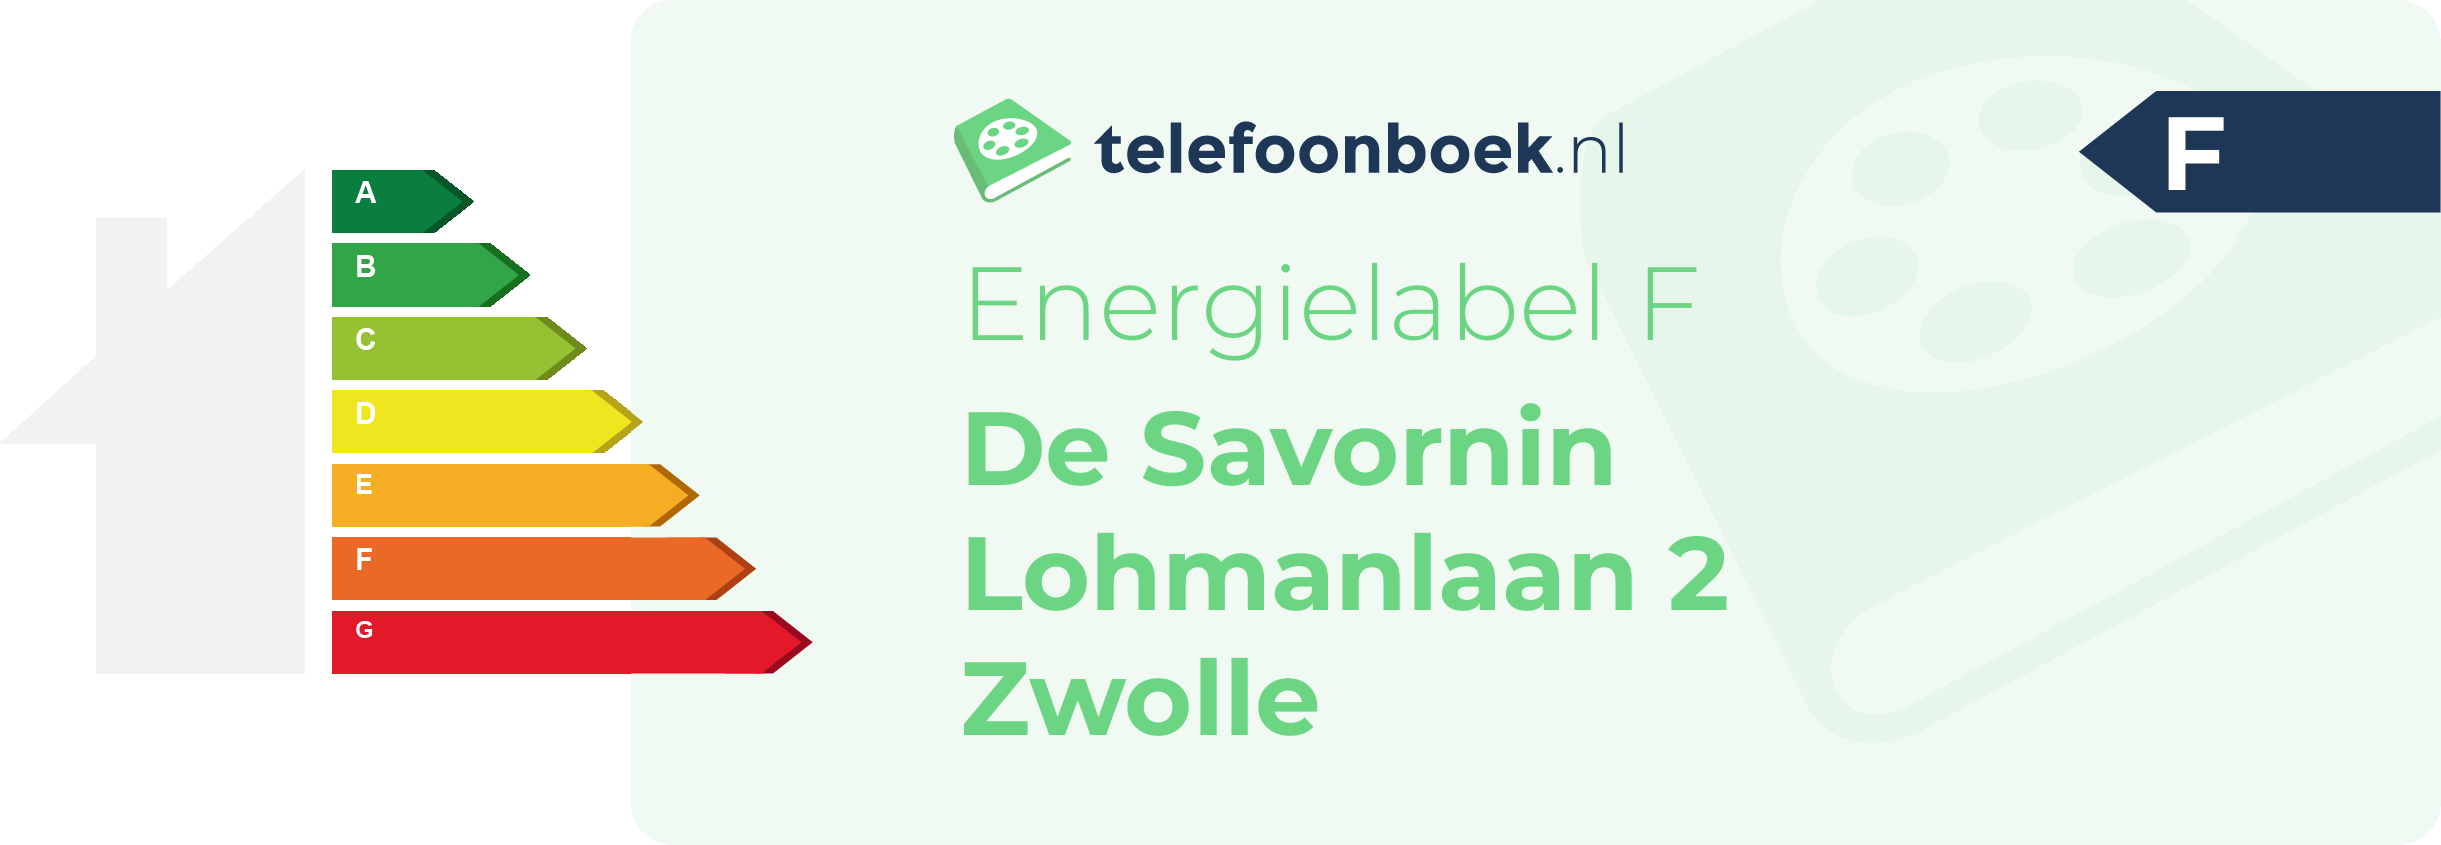 Energielabel De Savornin Lohmanlaan 2 Zwolle